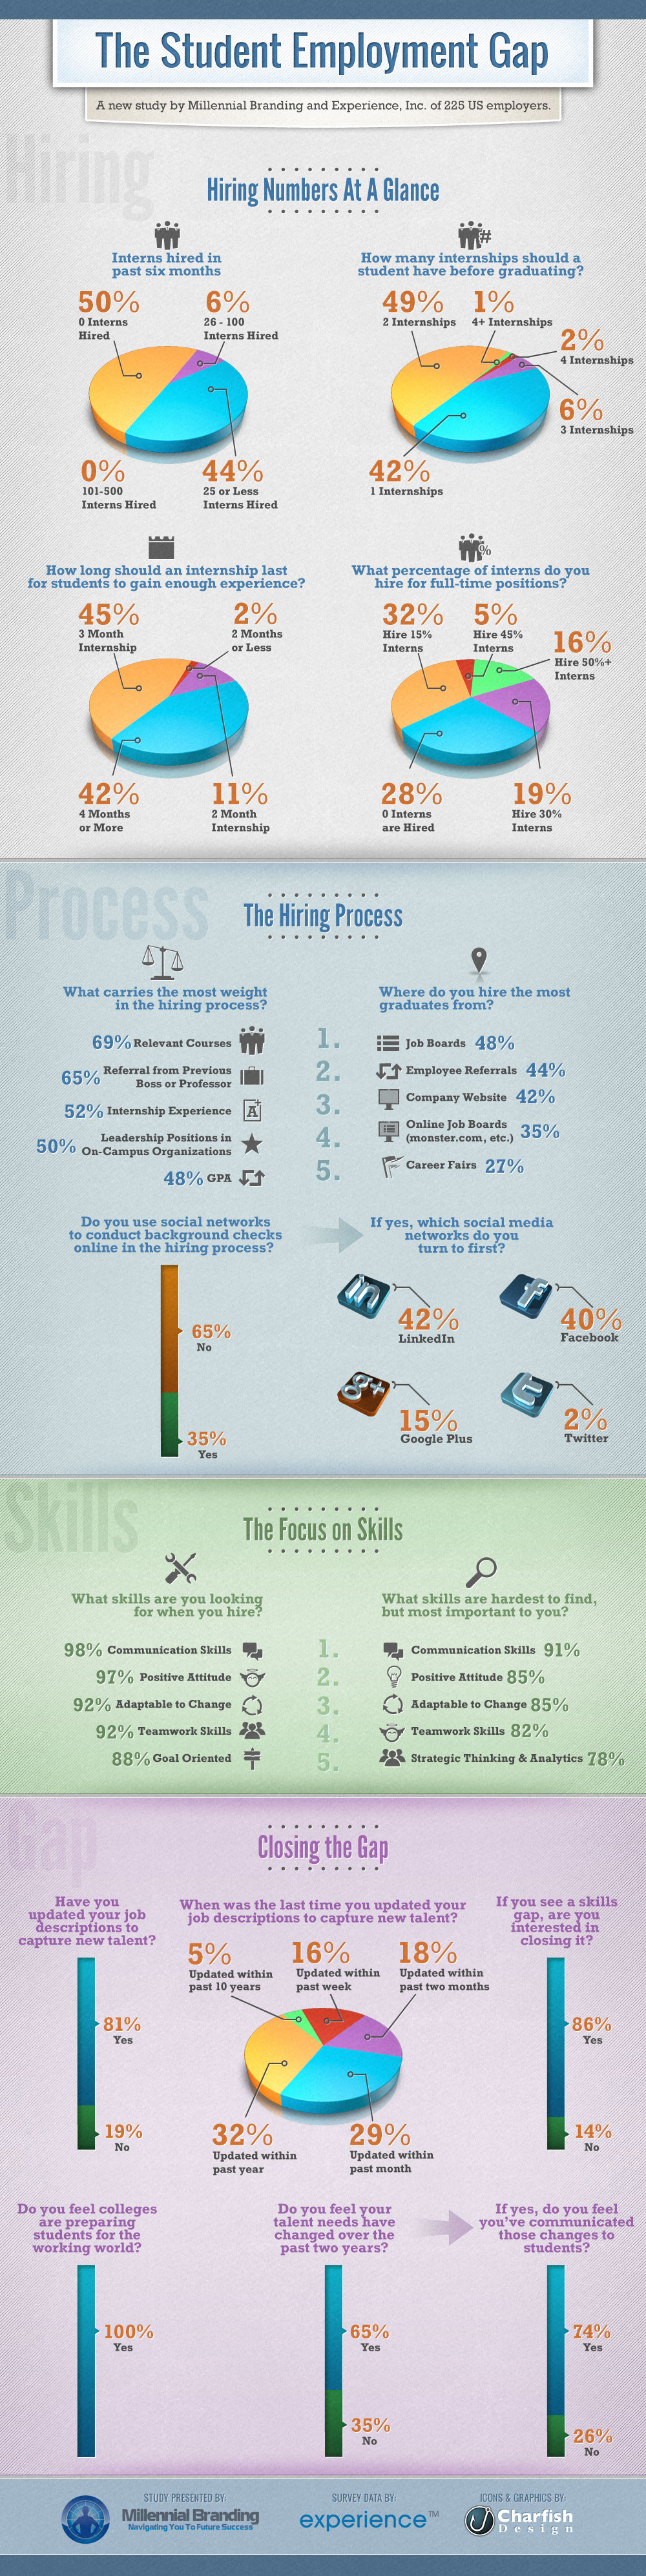 Student-Employment-Gap-infographic